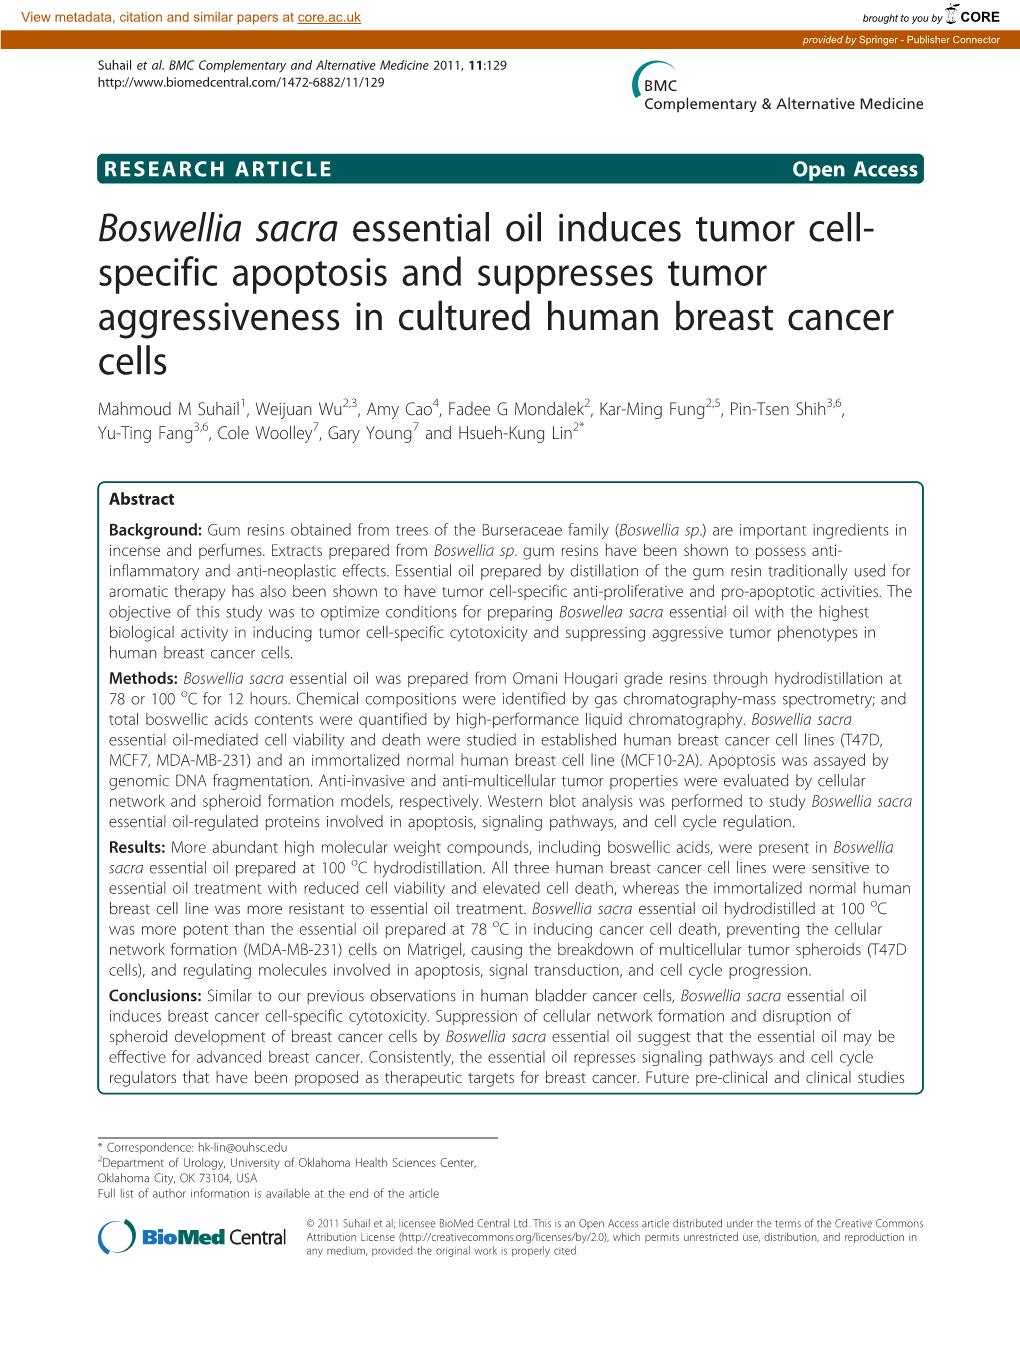 Boswellia Sacra Essential Oil Induces Tumor Cell